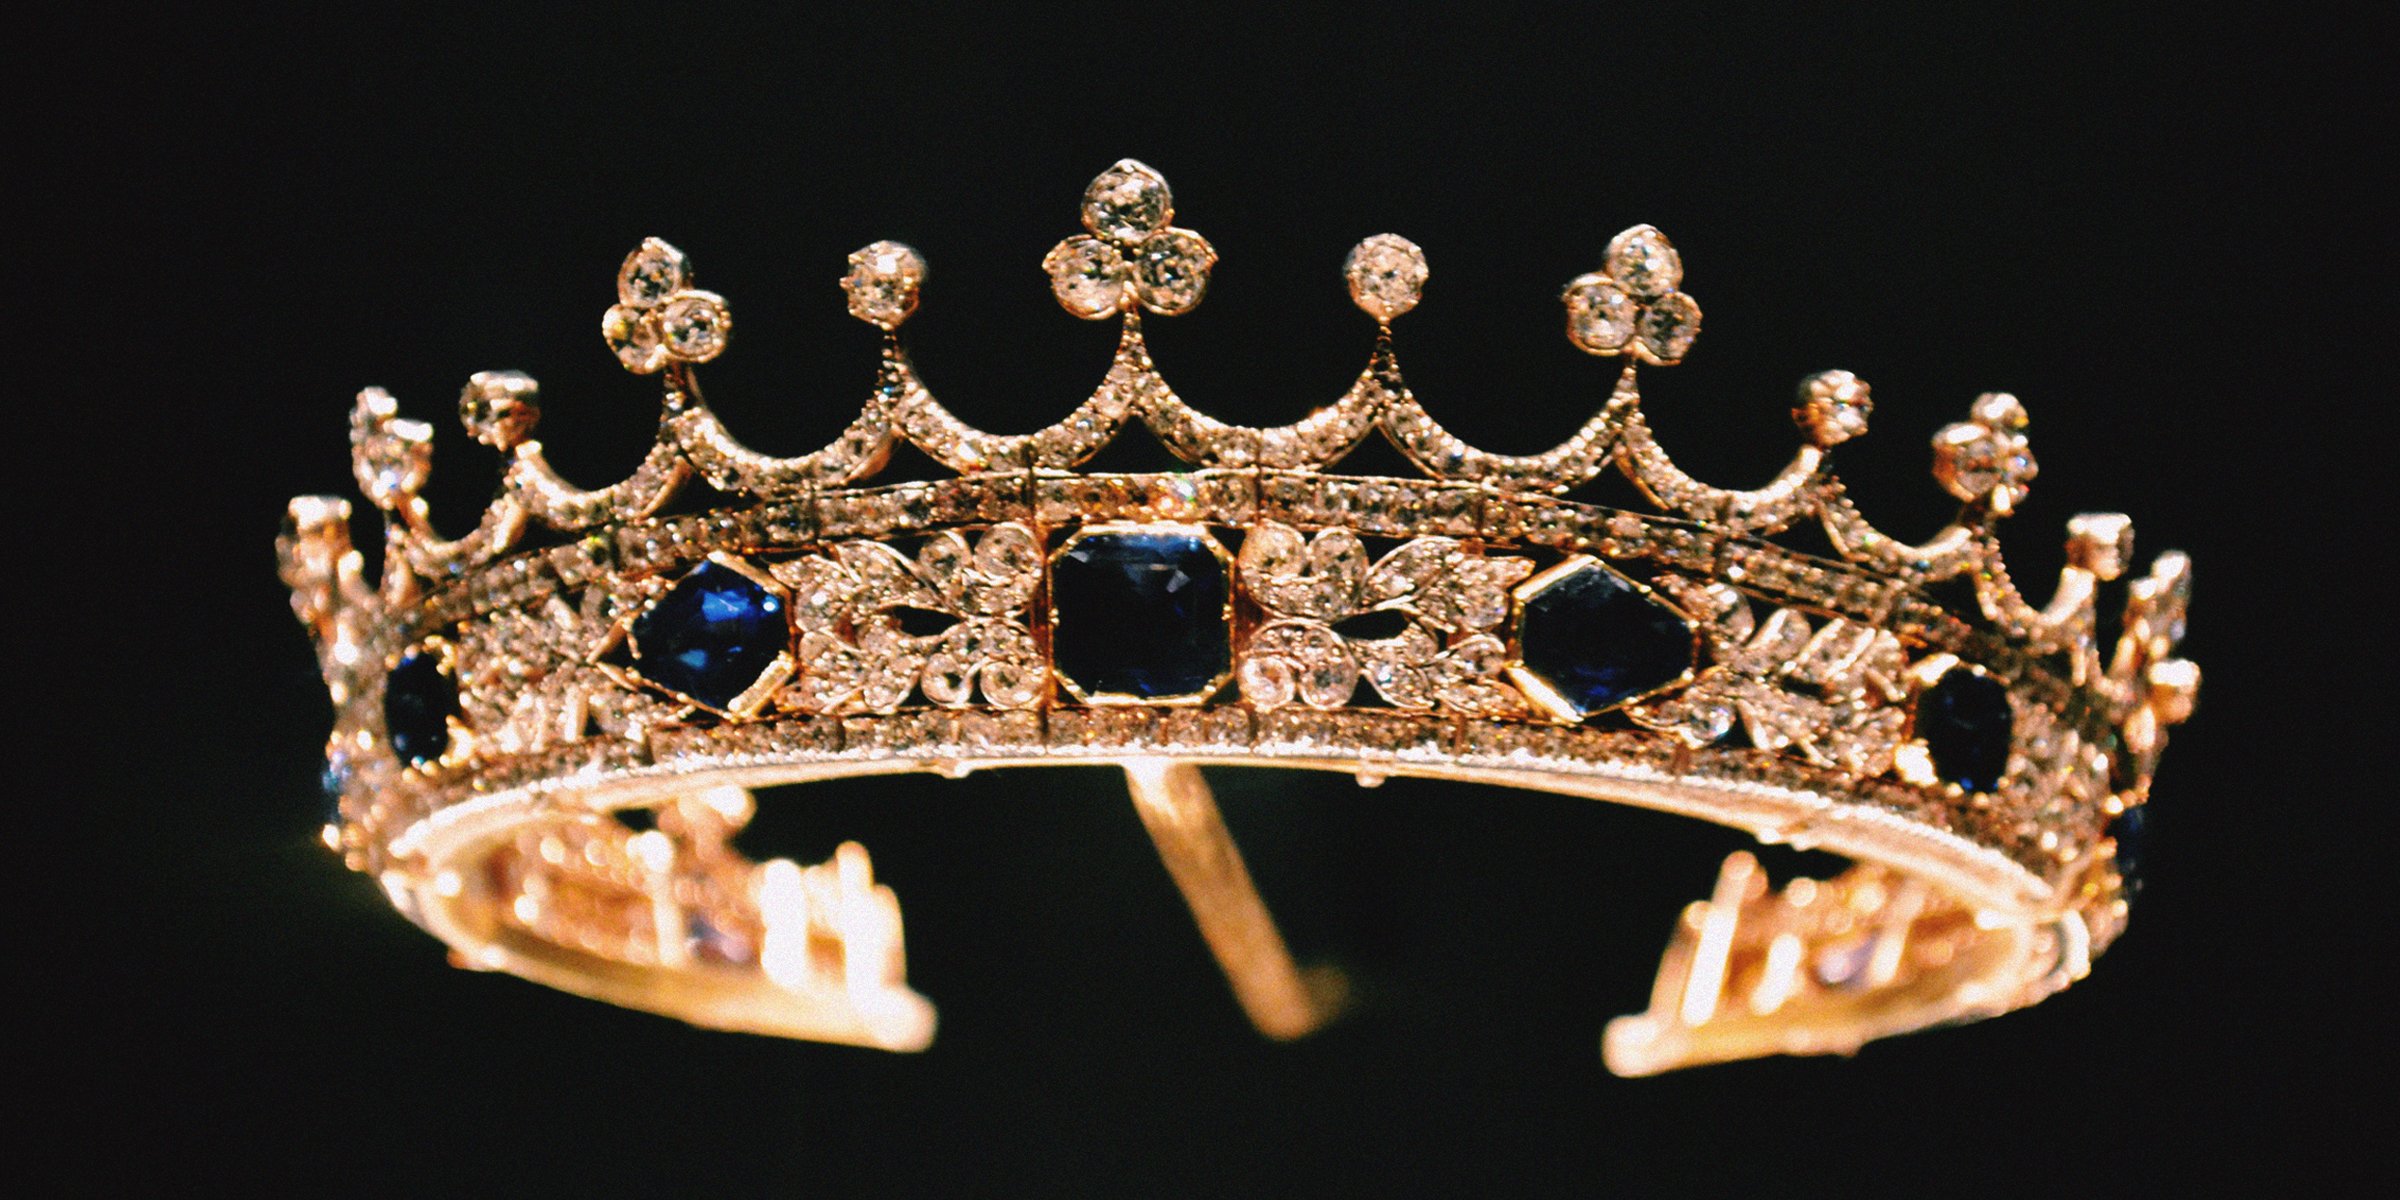 Photo of a crown | Source: Unsplash